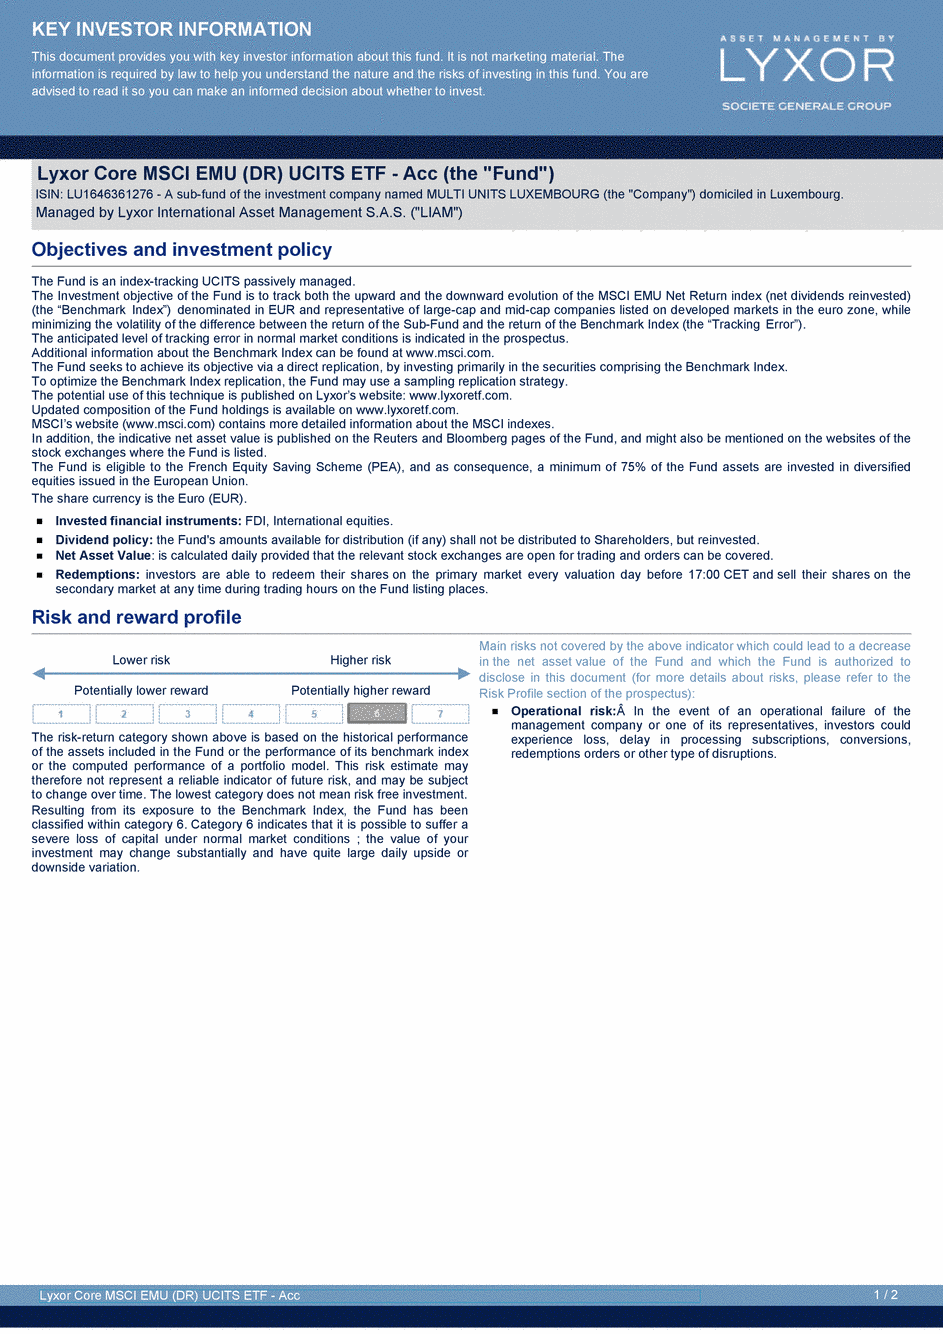 DICI Lyxor Core MSCI EMU (DR) UCITS ETF - Acc - 30/03/2020 - Anglais